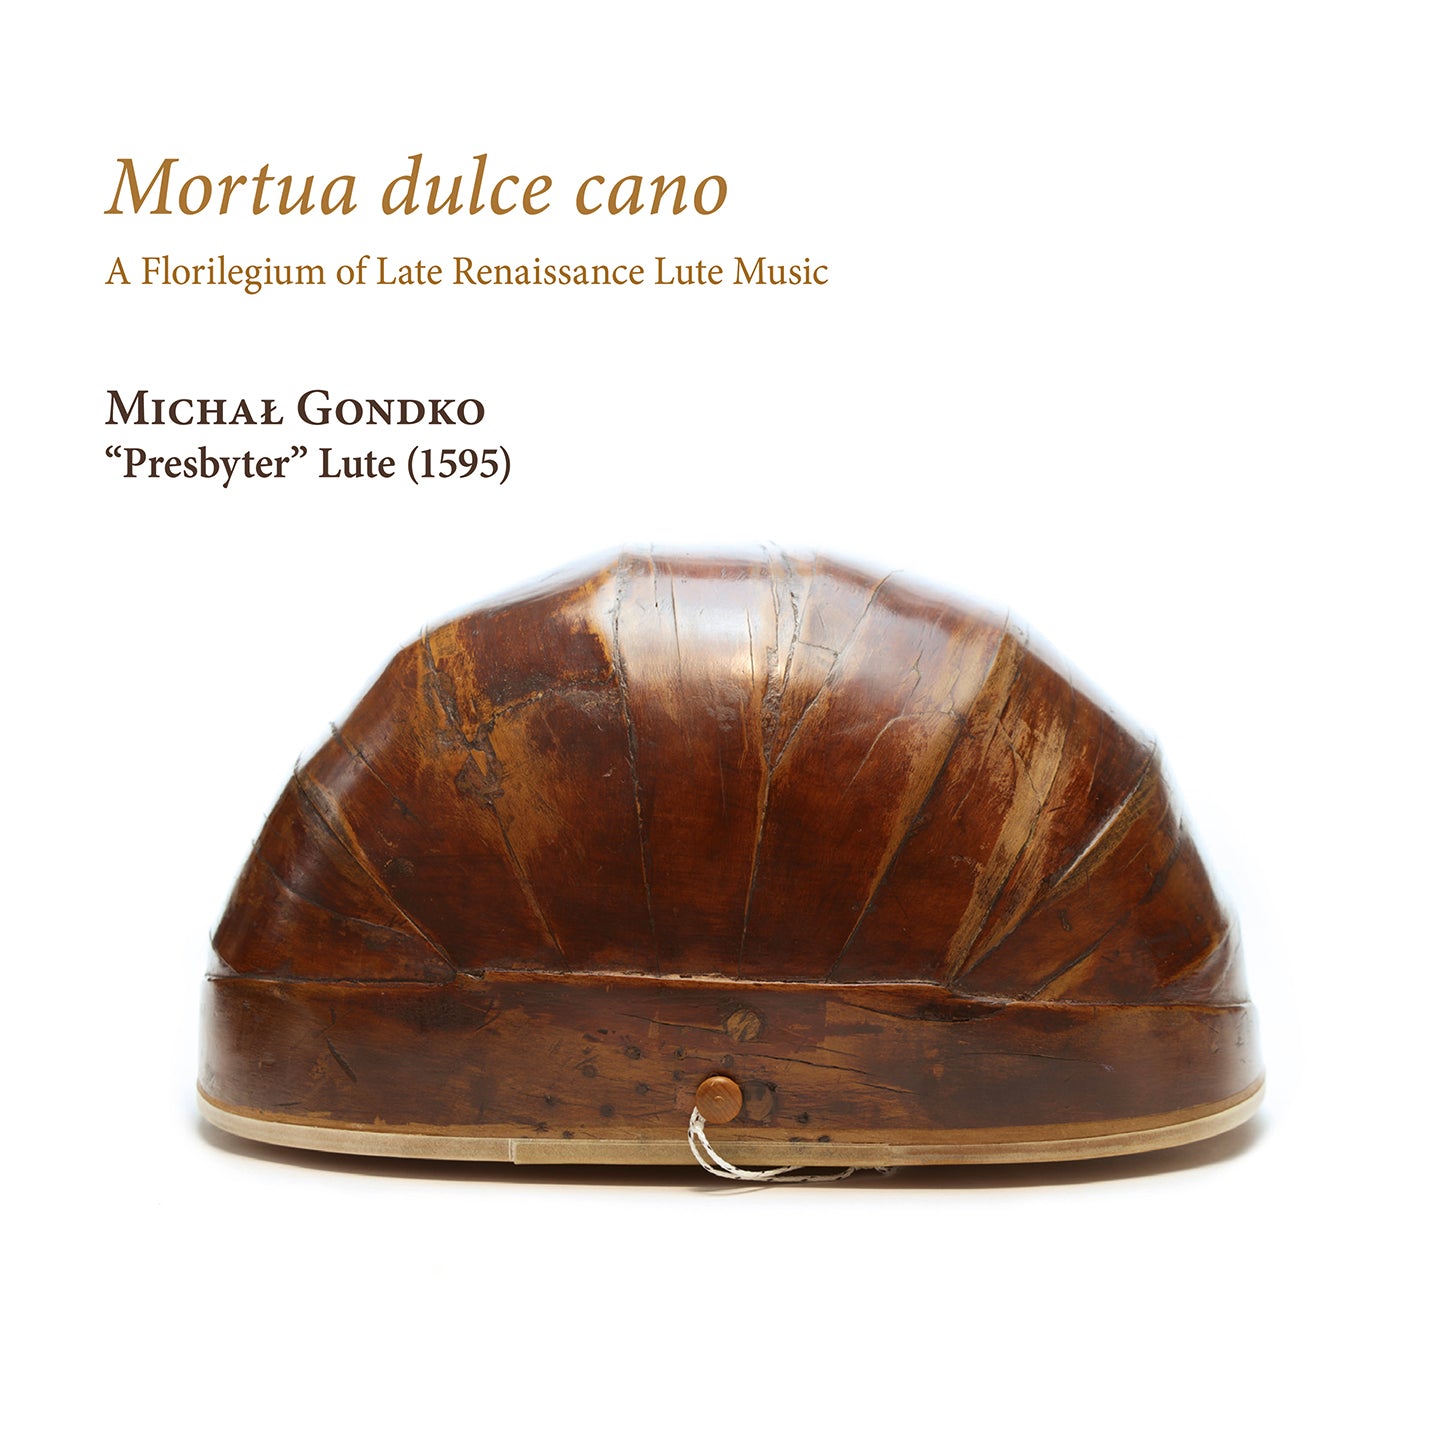 Mortua dulce Cano: A Florilegium of Renaissance Music on the 1595 "Presbyter" Lute / Gondko